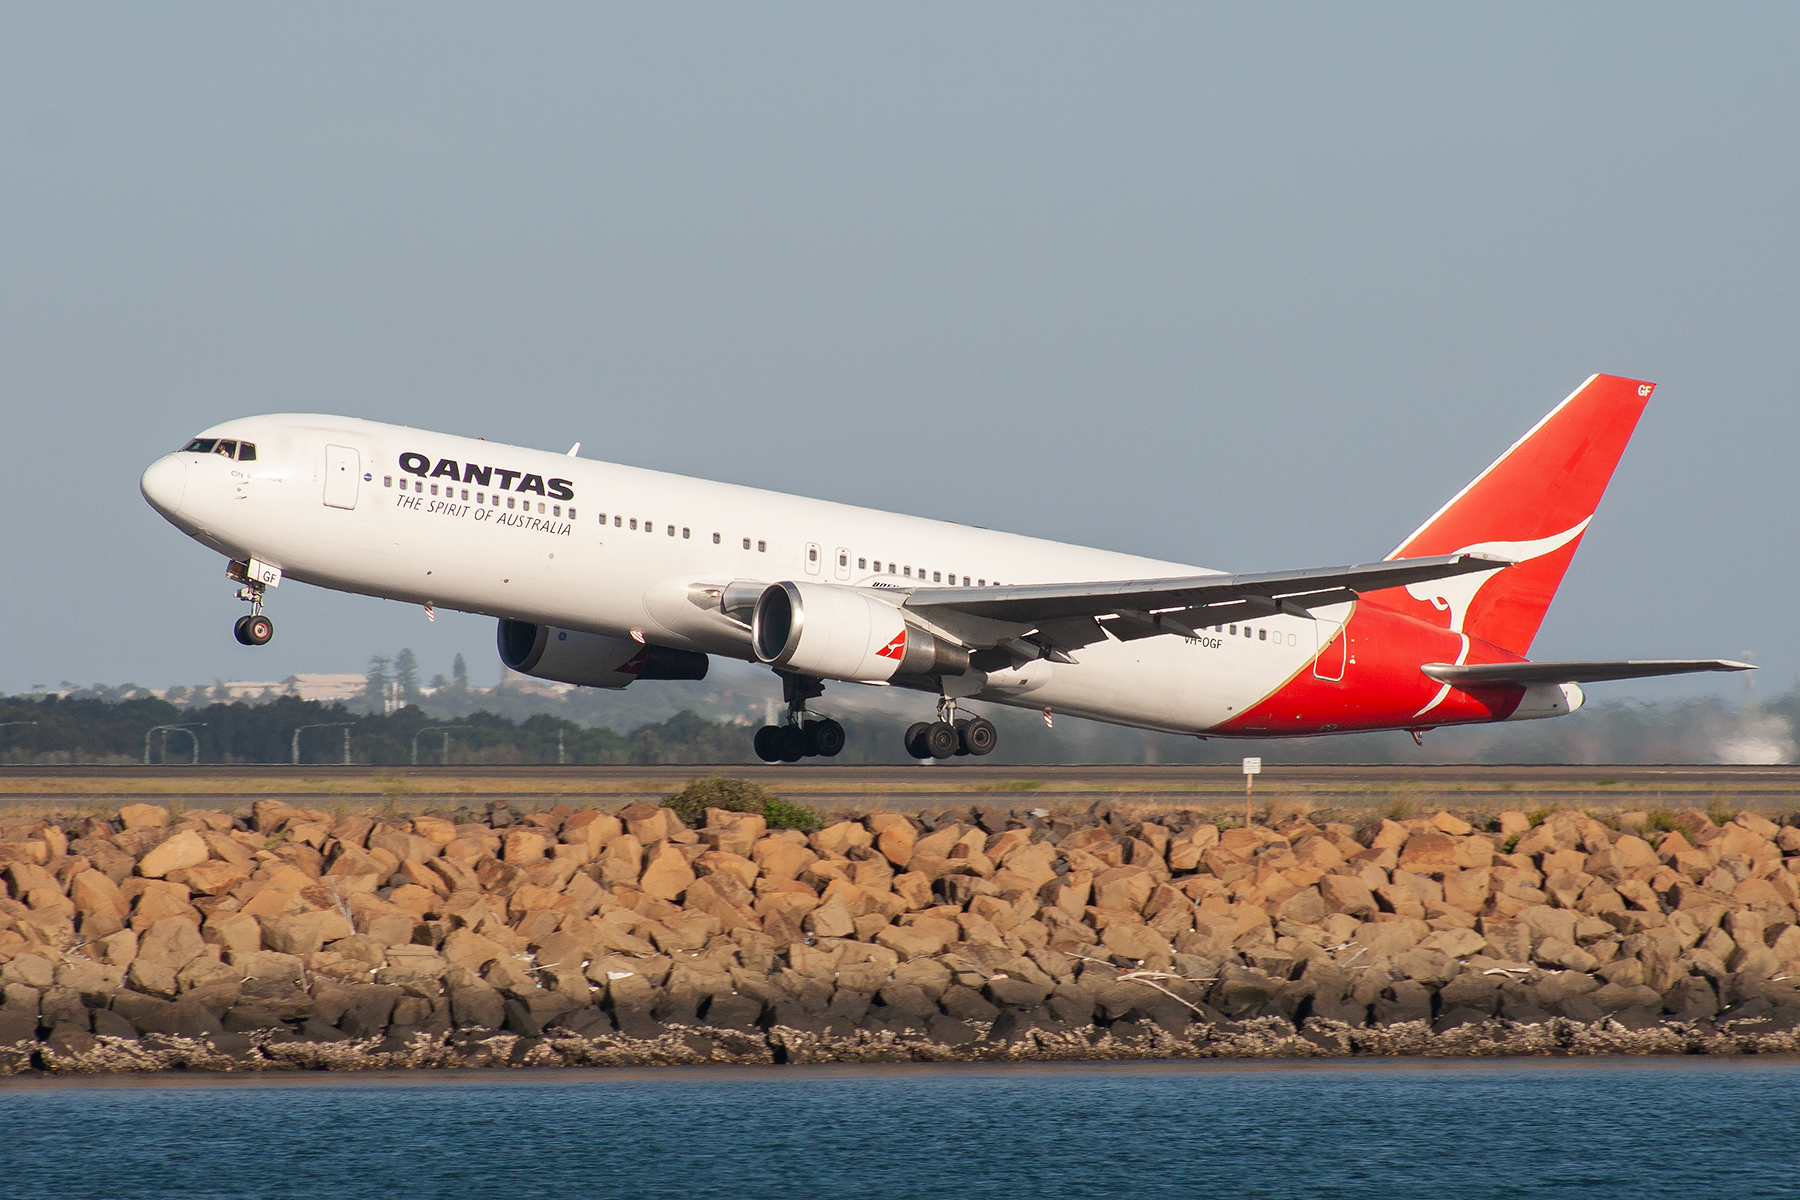 Qantas Boeing 767-300ER VH-OGF at Kingsford Smith